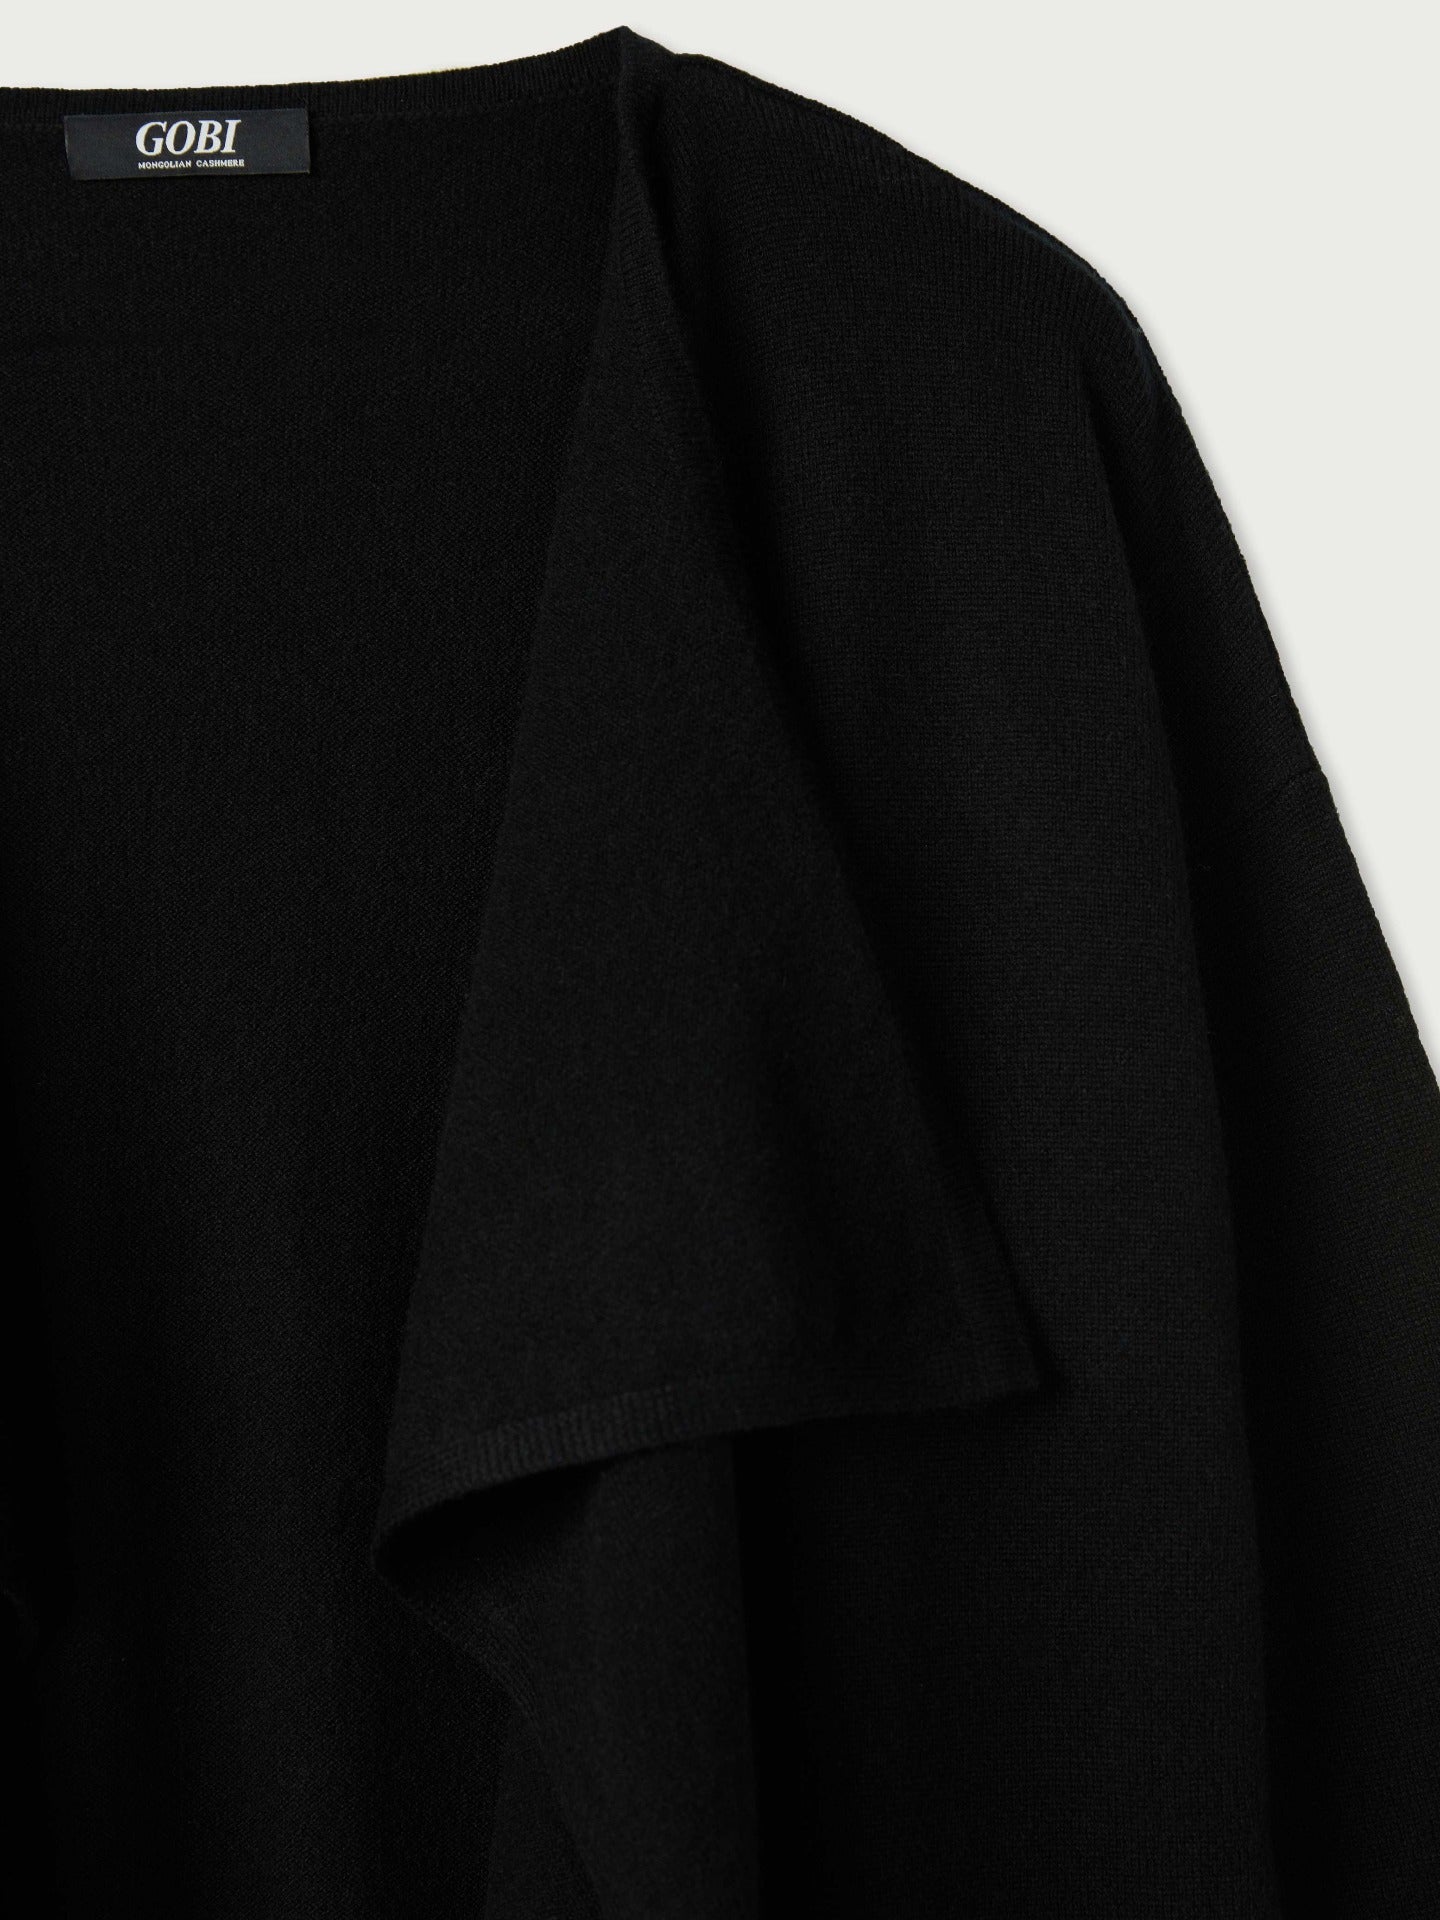 Women's Cashmere Waterfall Collar Cardigan Black - Gobi Cashmere